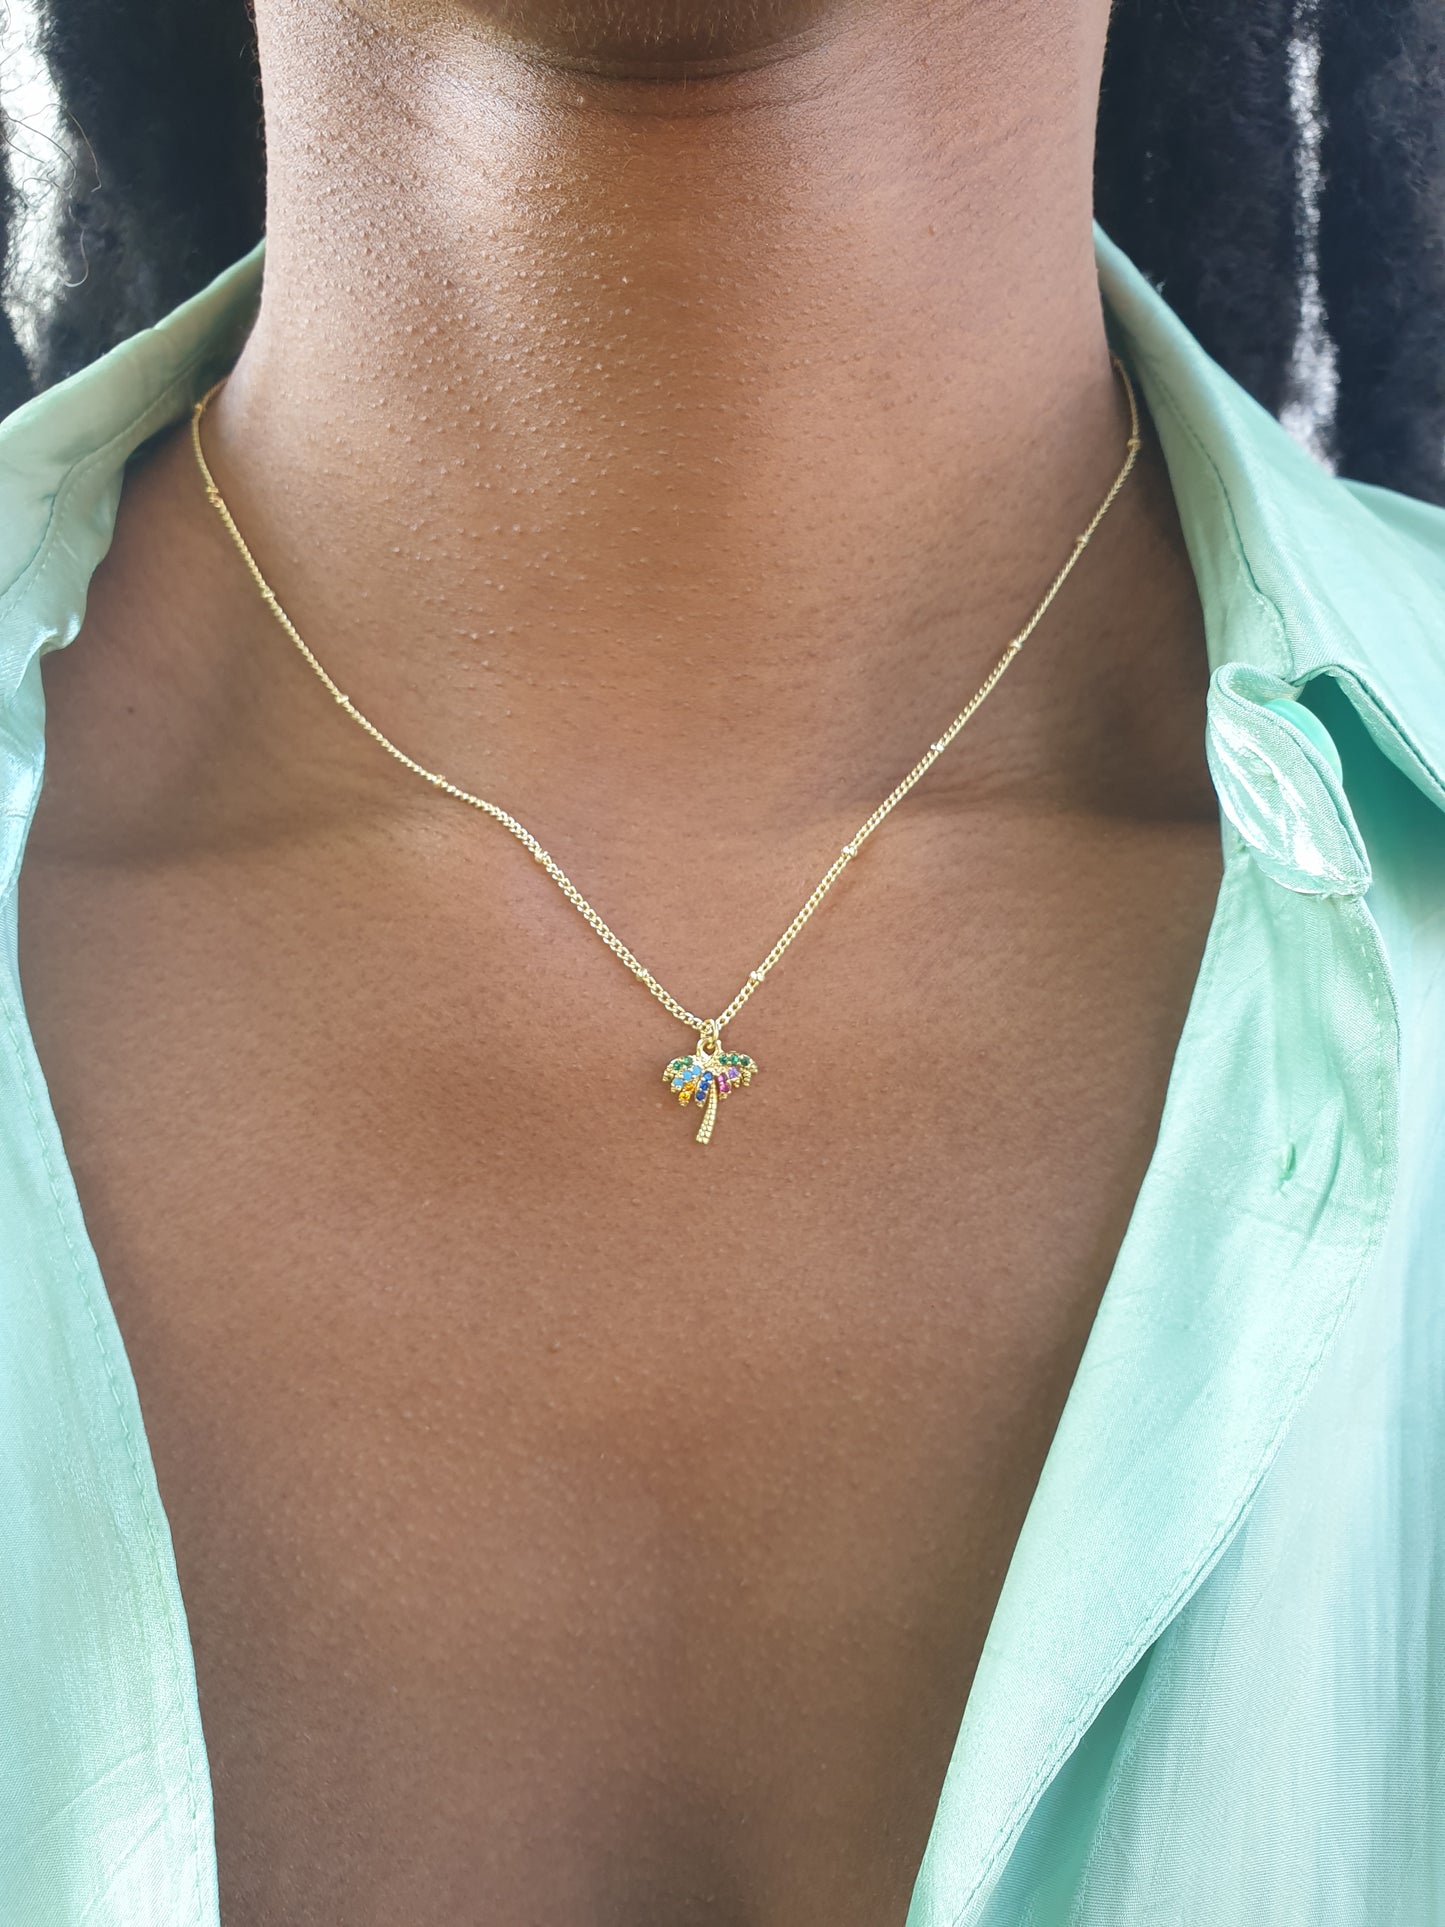 Mini Palm Tree Pendant Gold Chain Necklace